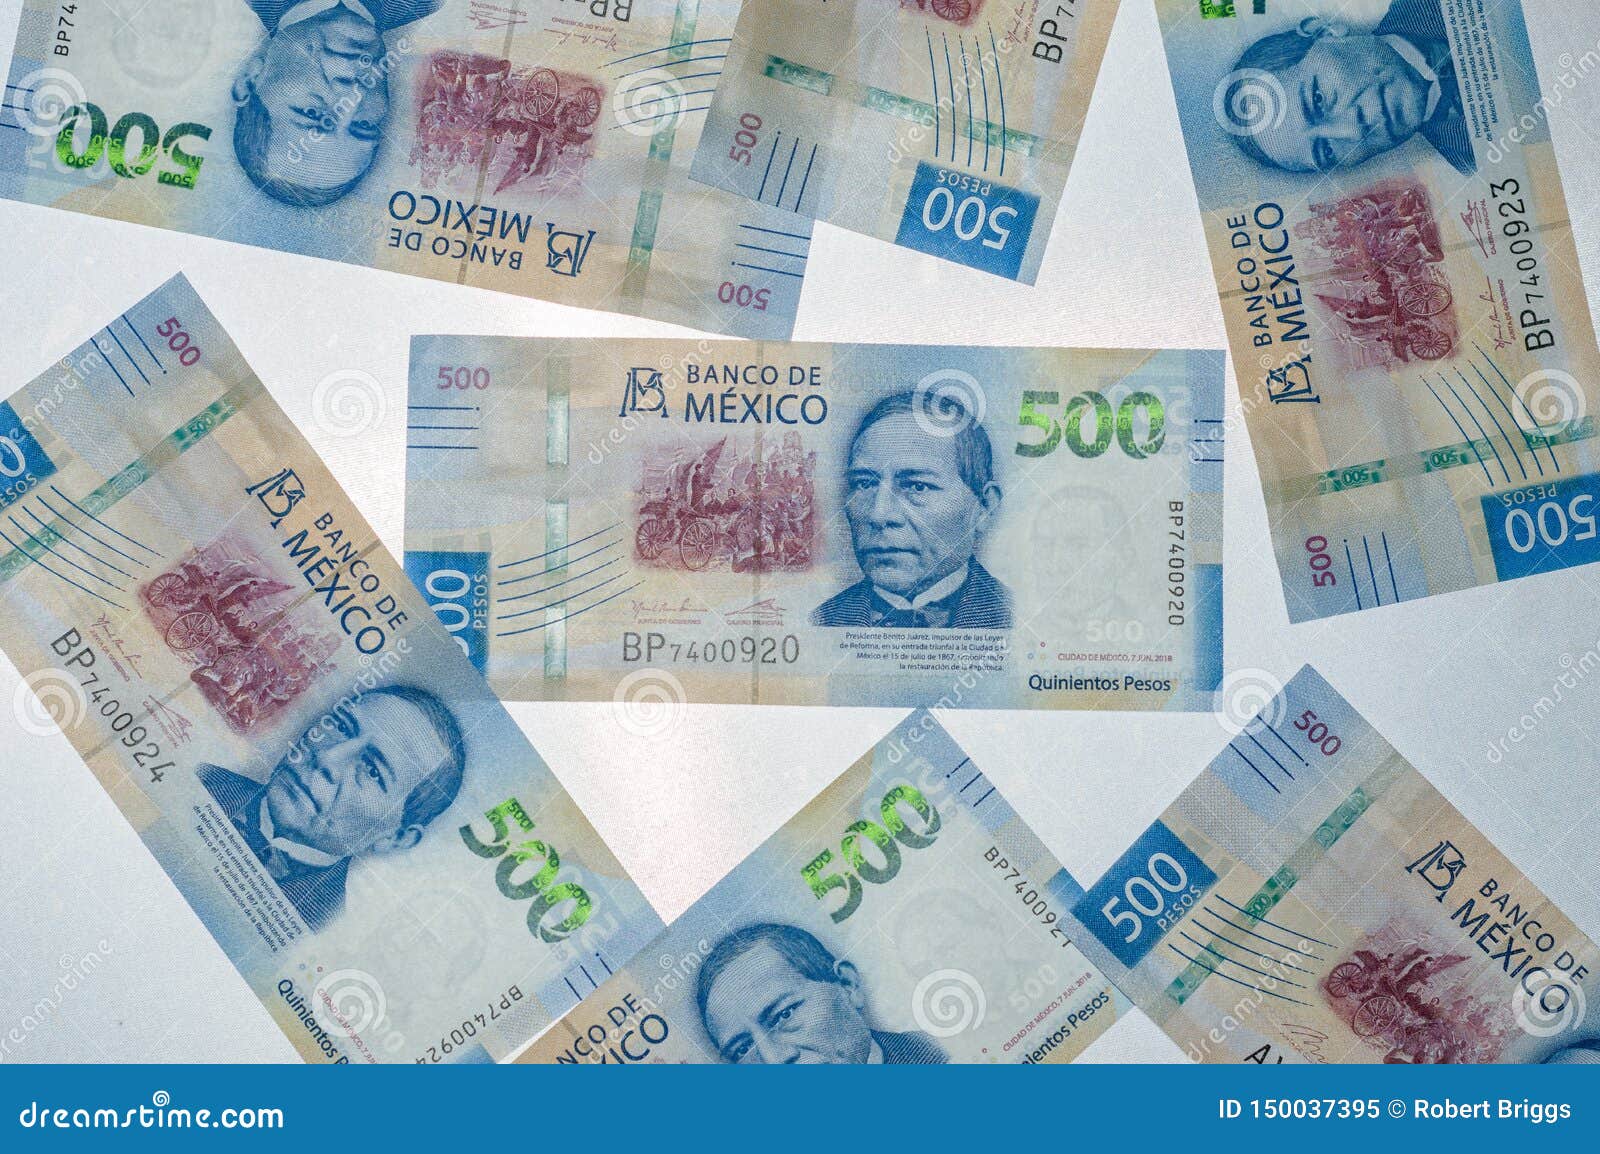 new mexican 500 peso bills